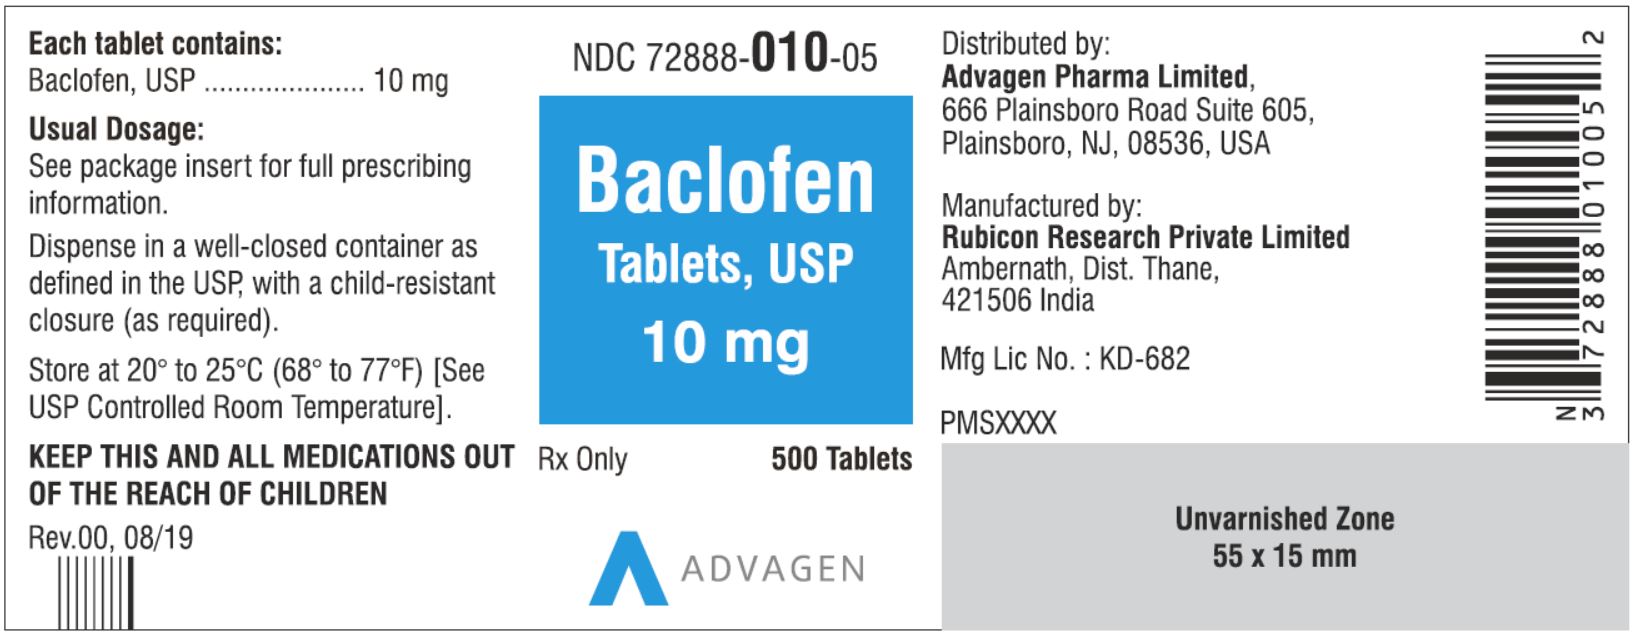 NDC: <a href=/NDC/72888-010-05>72888-010-05</a> - Baclofen Tablets, USP 10 mg - 500 Tablets